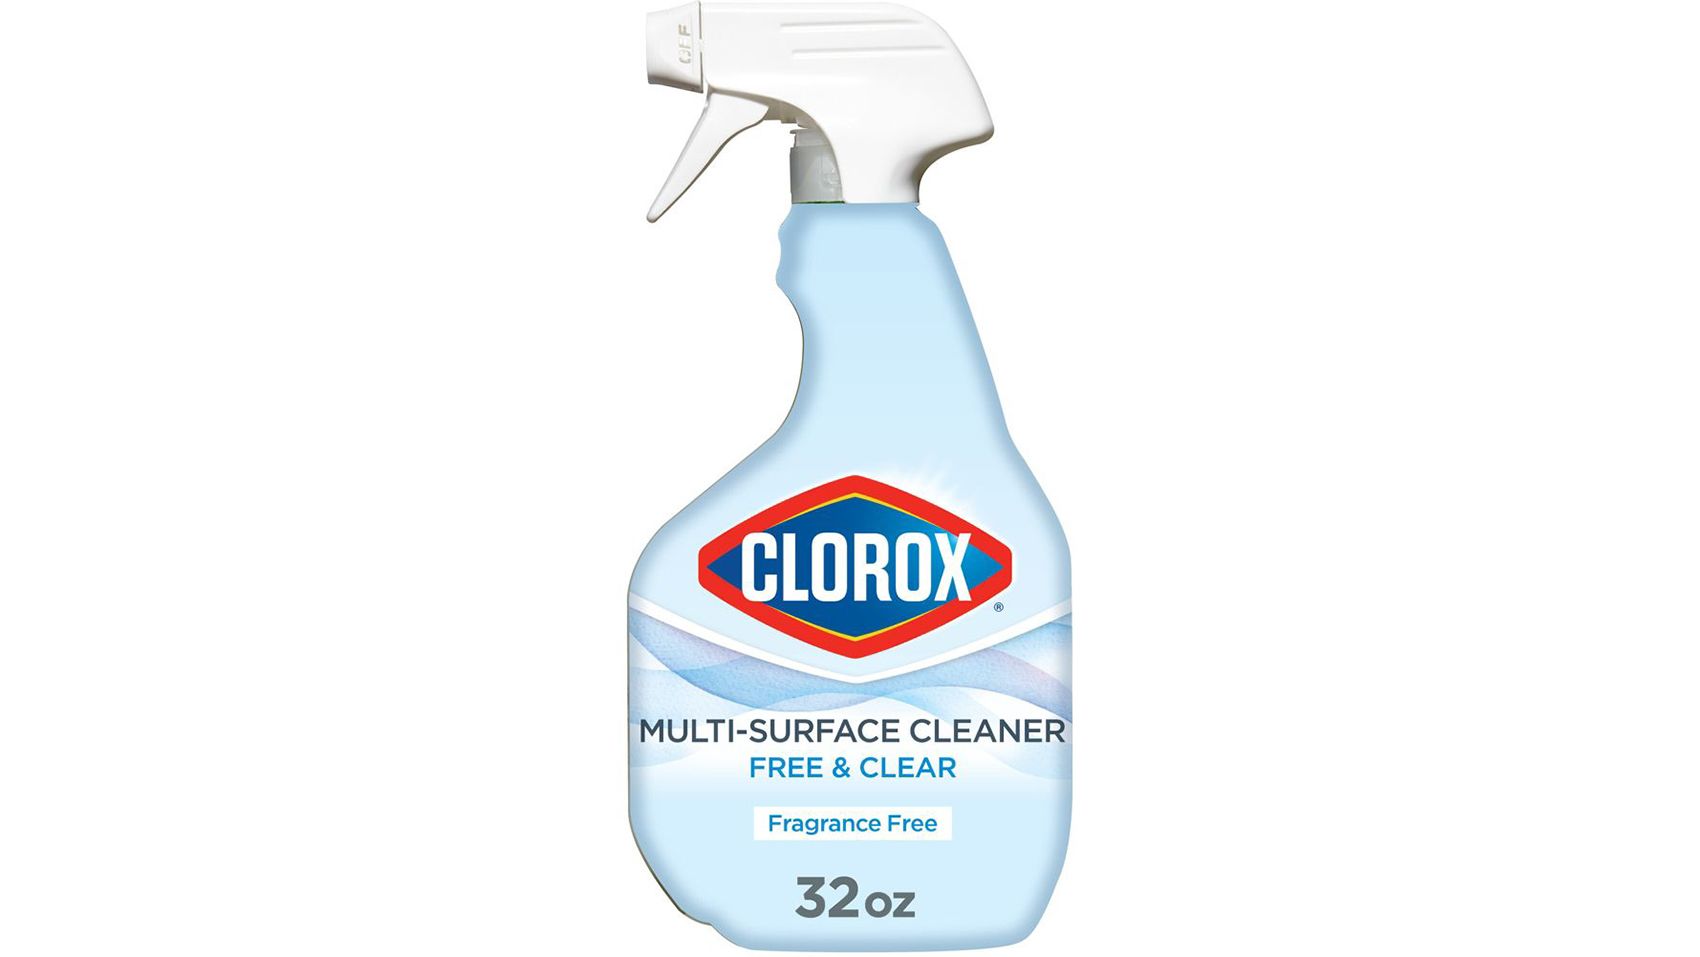 https://media.cnn.com/api/v1/images/stellar/prod/underscored-clorox-free-clear-multi-surface-cleaner.jpg?c=original